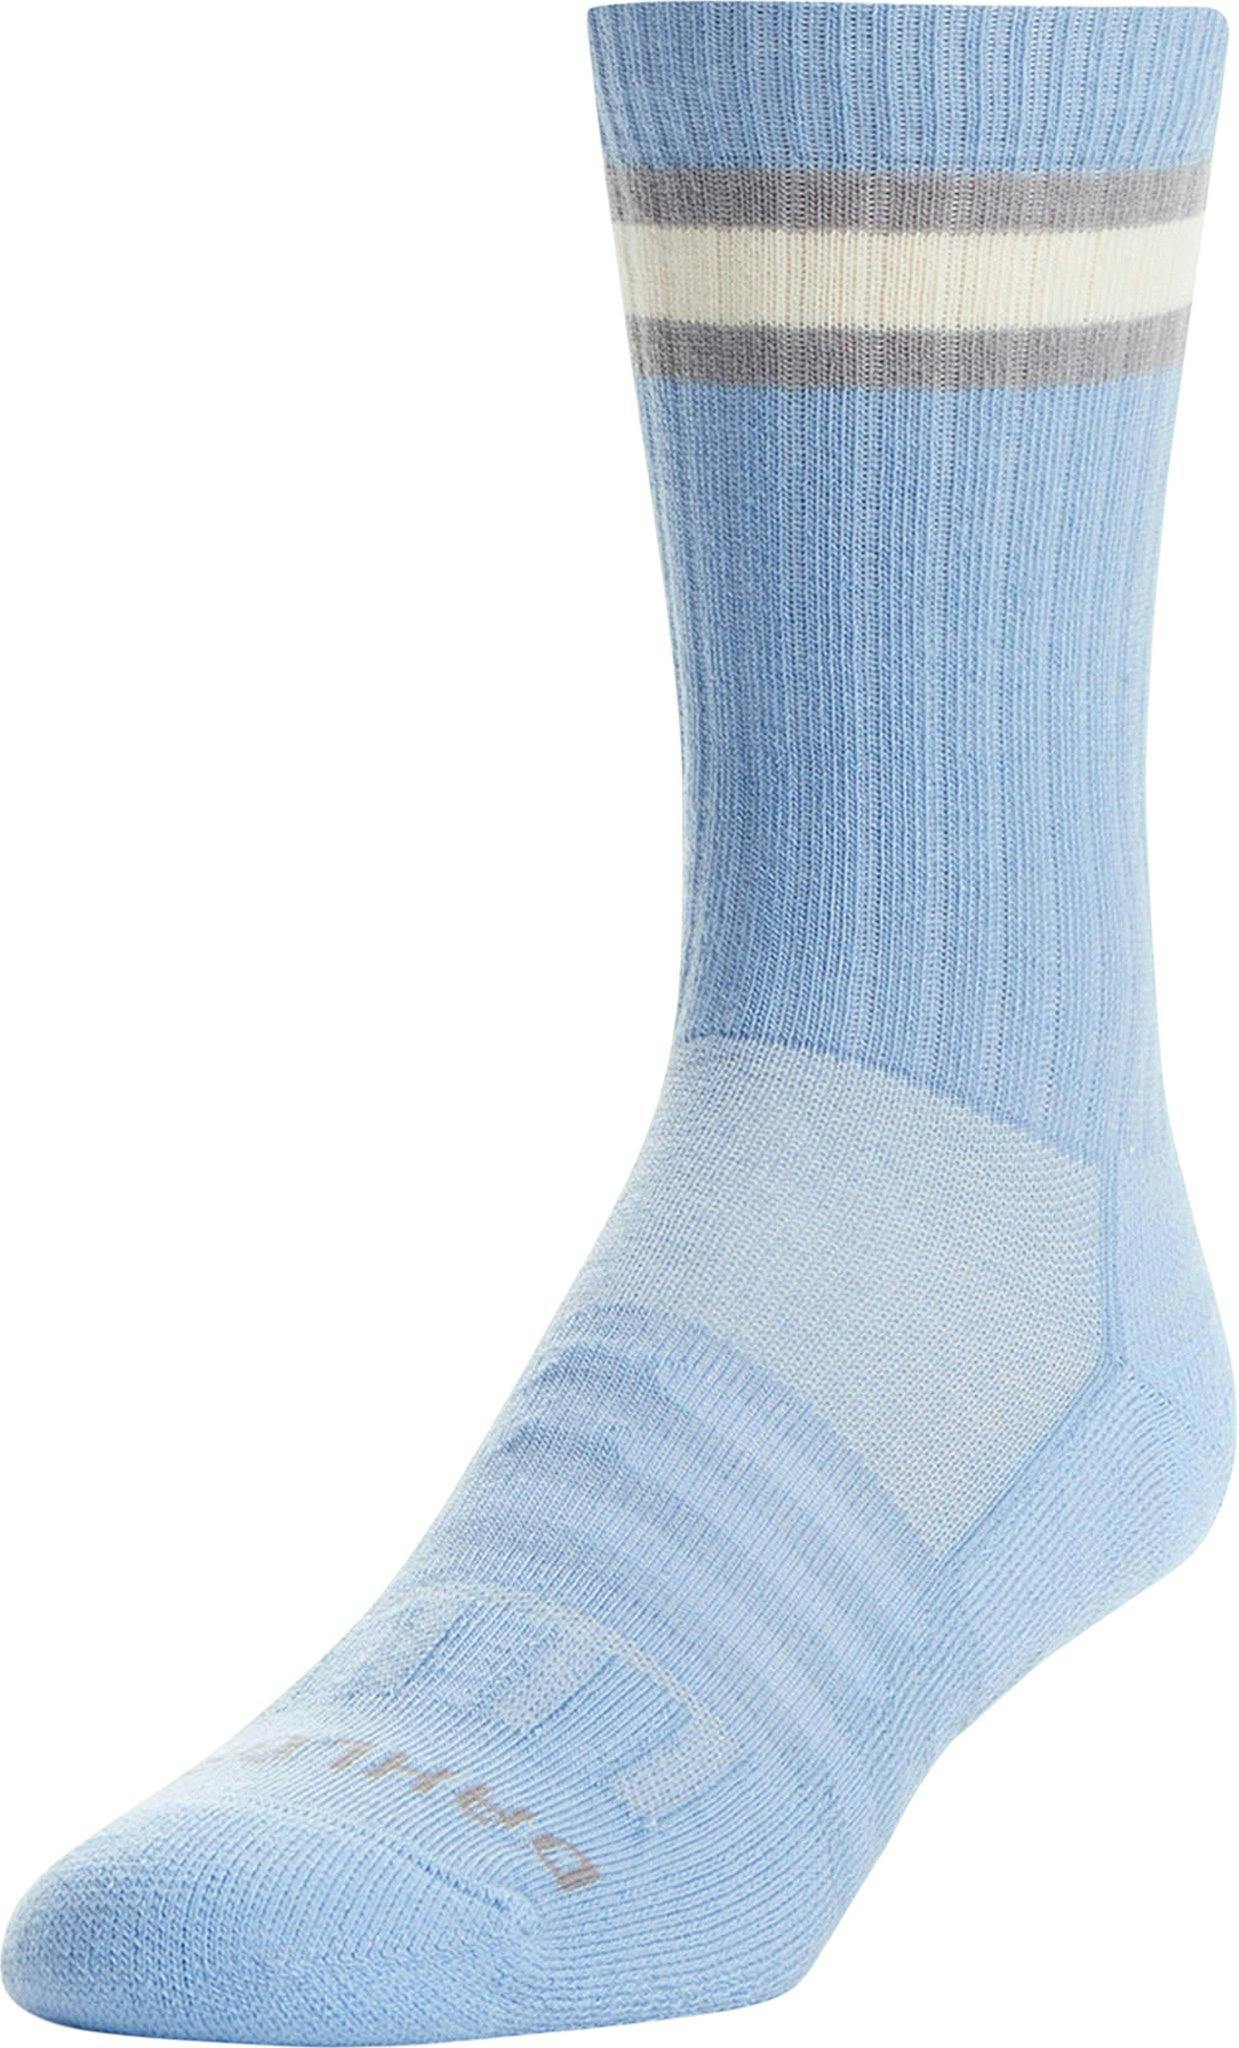 Product image for Heritage Merino Sock - Kid's